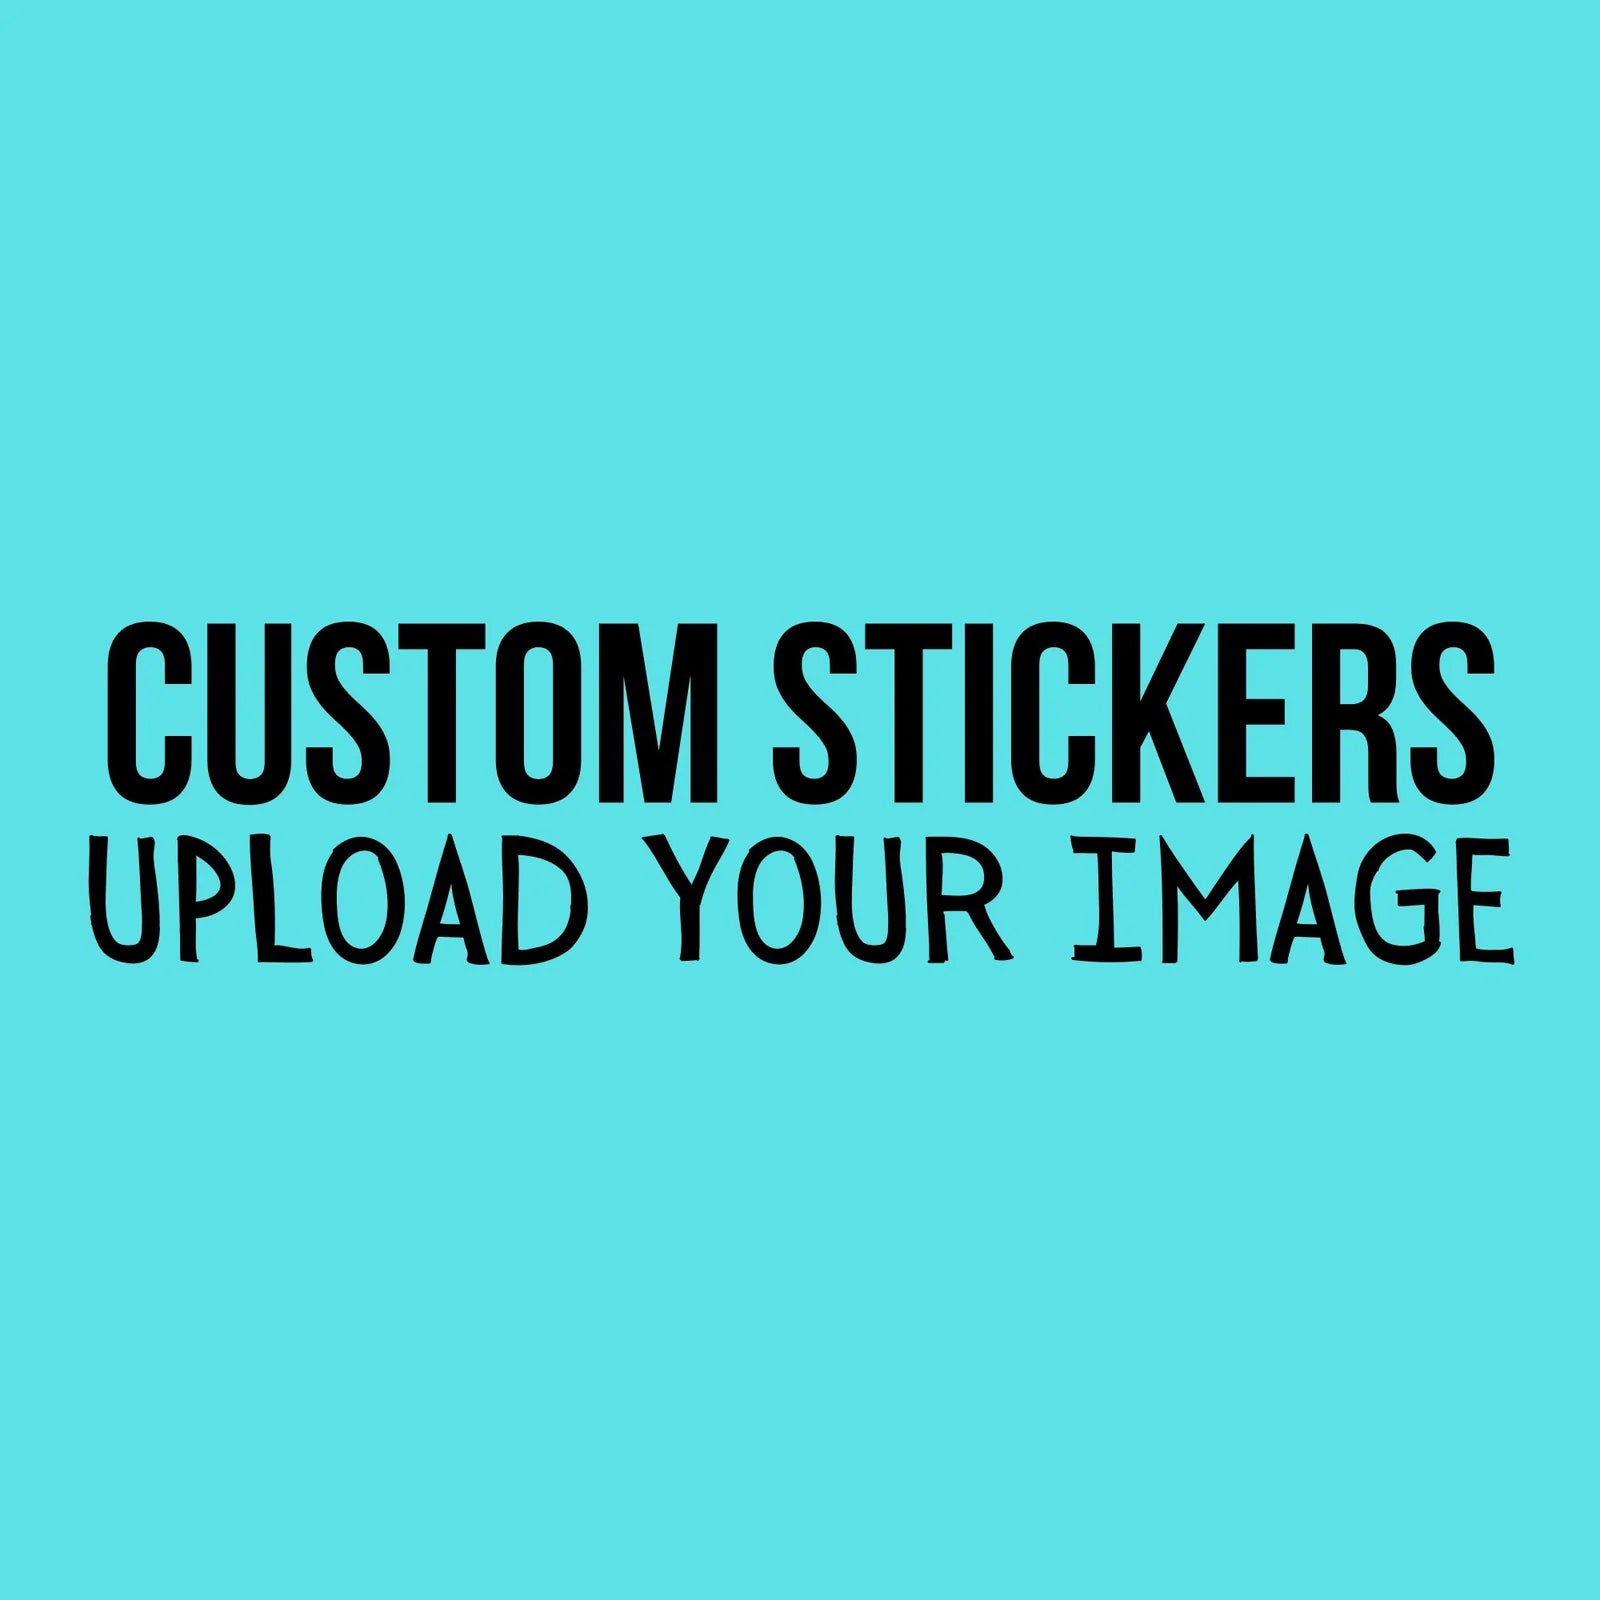 Custom Stickers | Upload Your Image